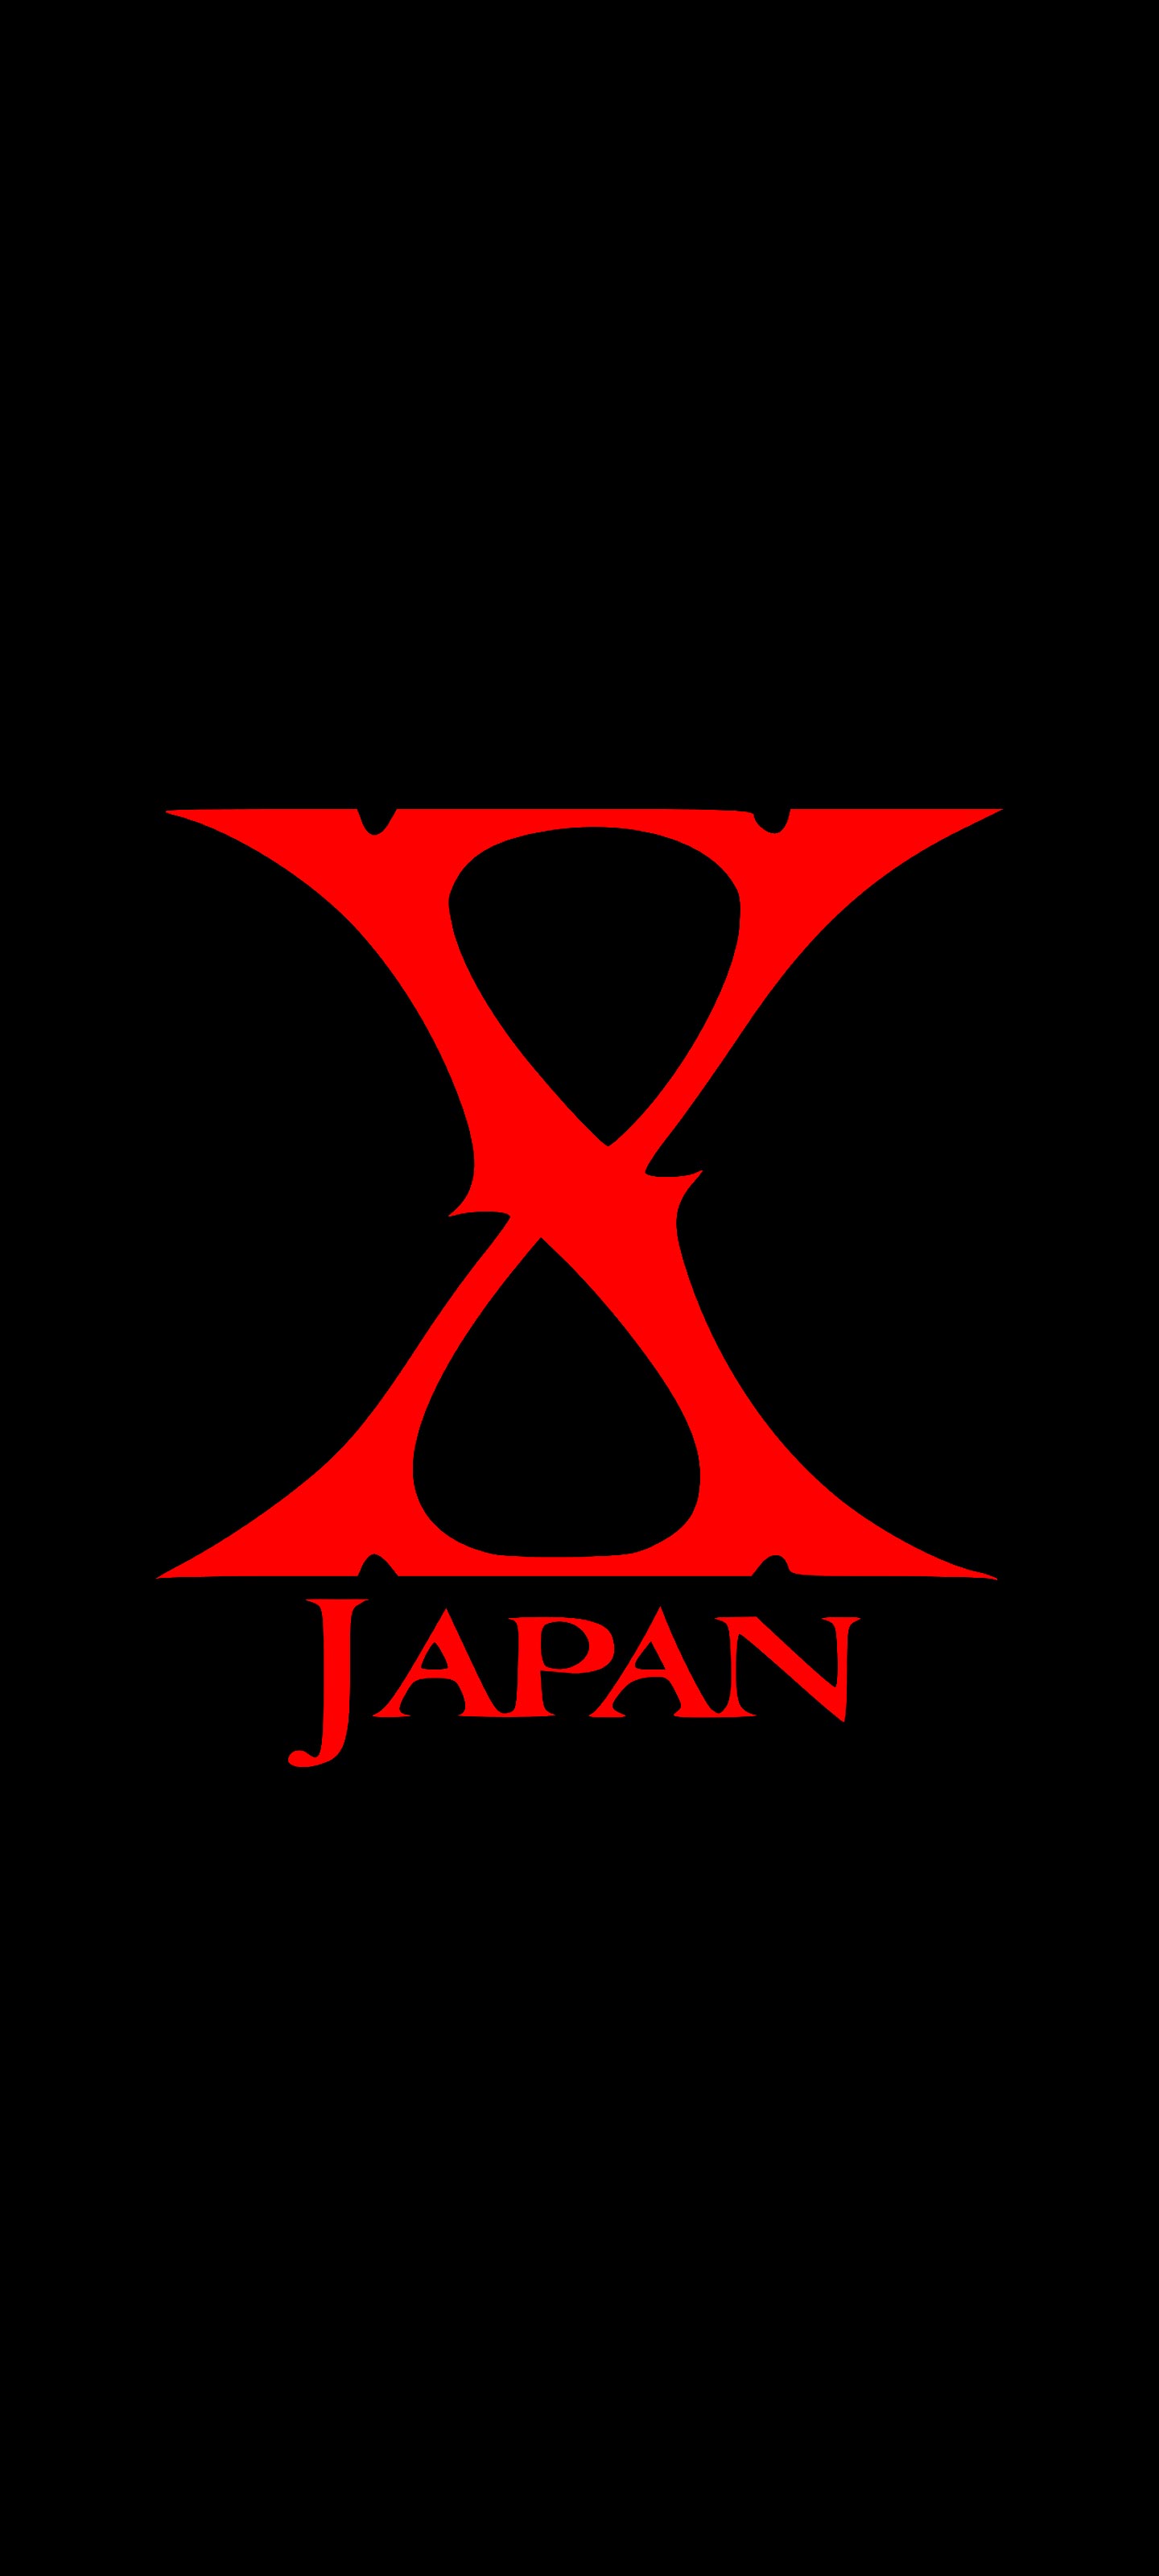 X Japan エックスジャパン ロゴ の無料待ち受け画像 スマホ壁紙 Iphone Android 1 待ち受けparadise